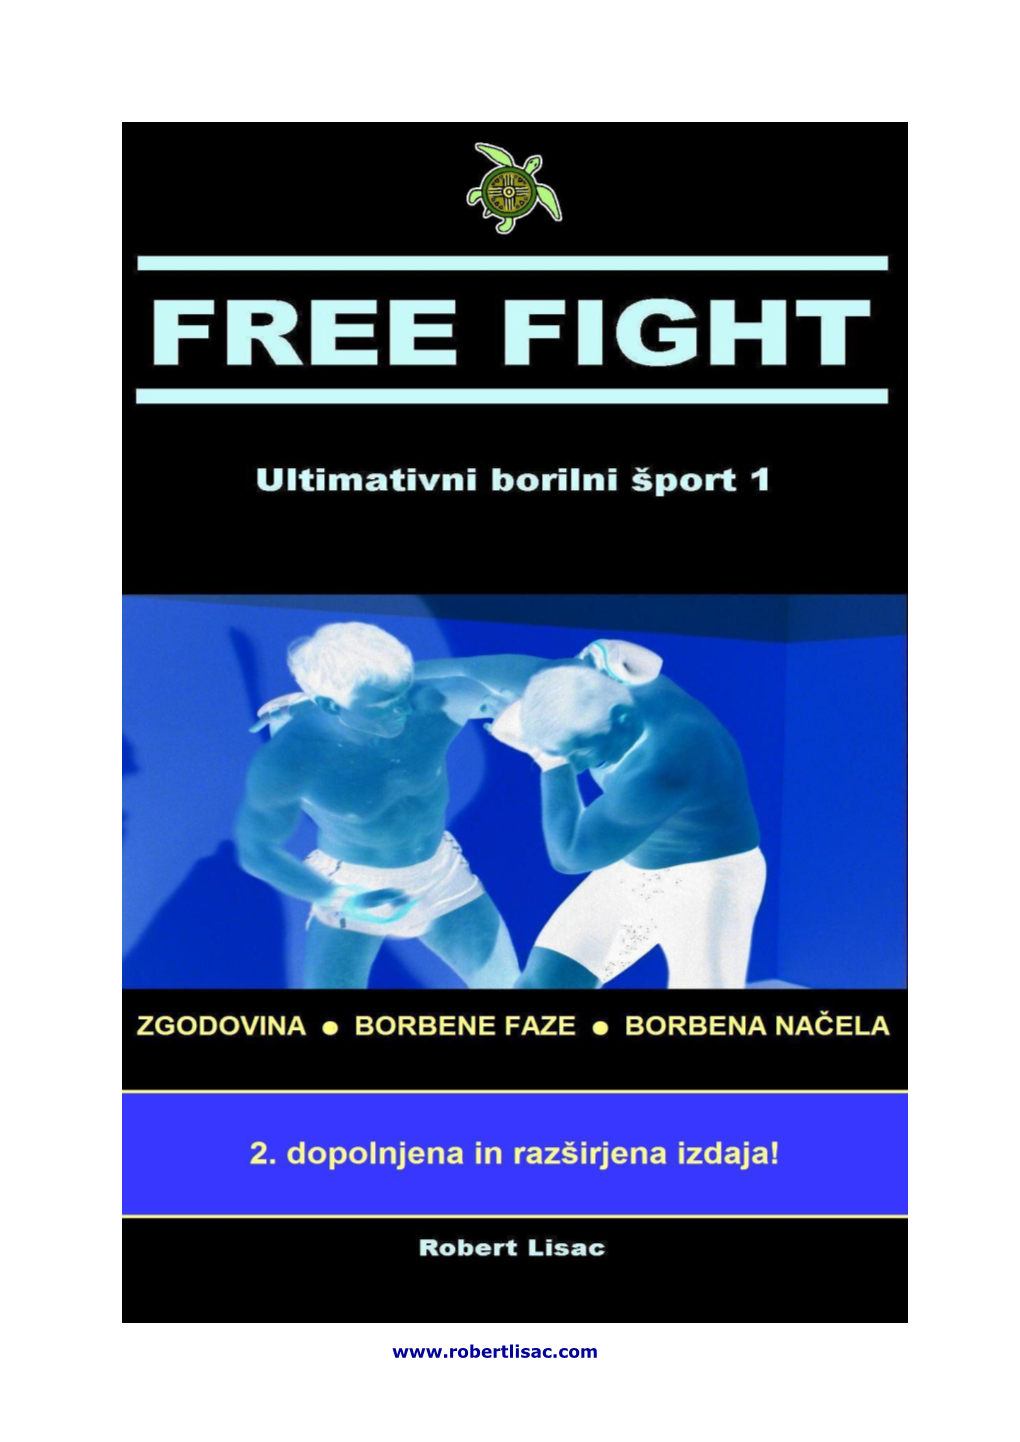 Free Fight Nova Borilna Zvrst V Sloveniji